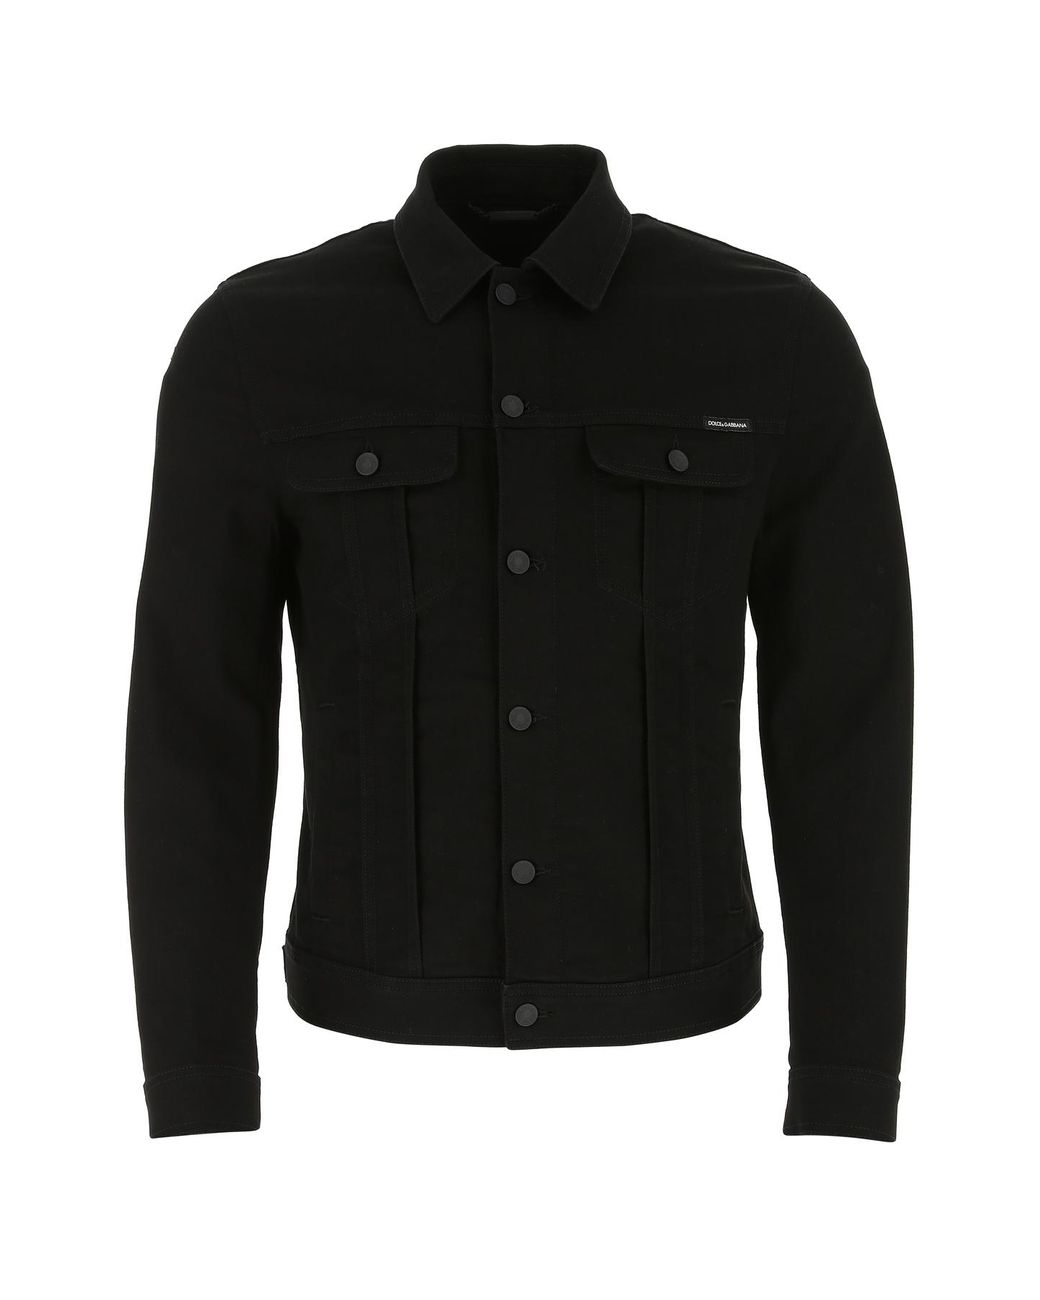 Dolce & Gabbana Stretch Denim Jacket in Black for Men - Lyst